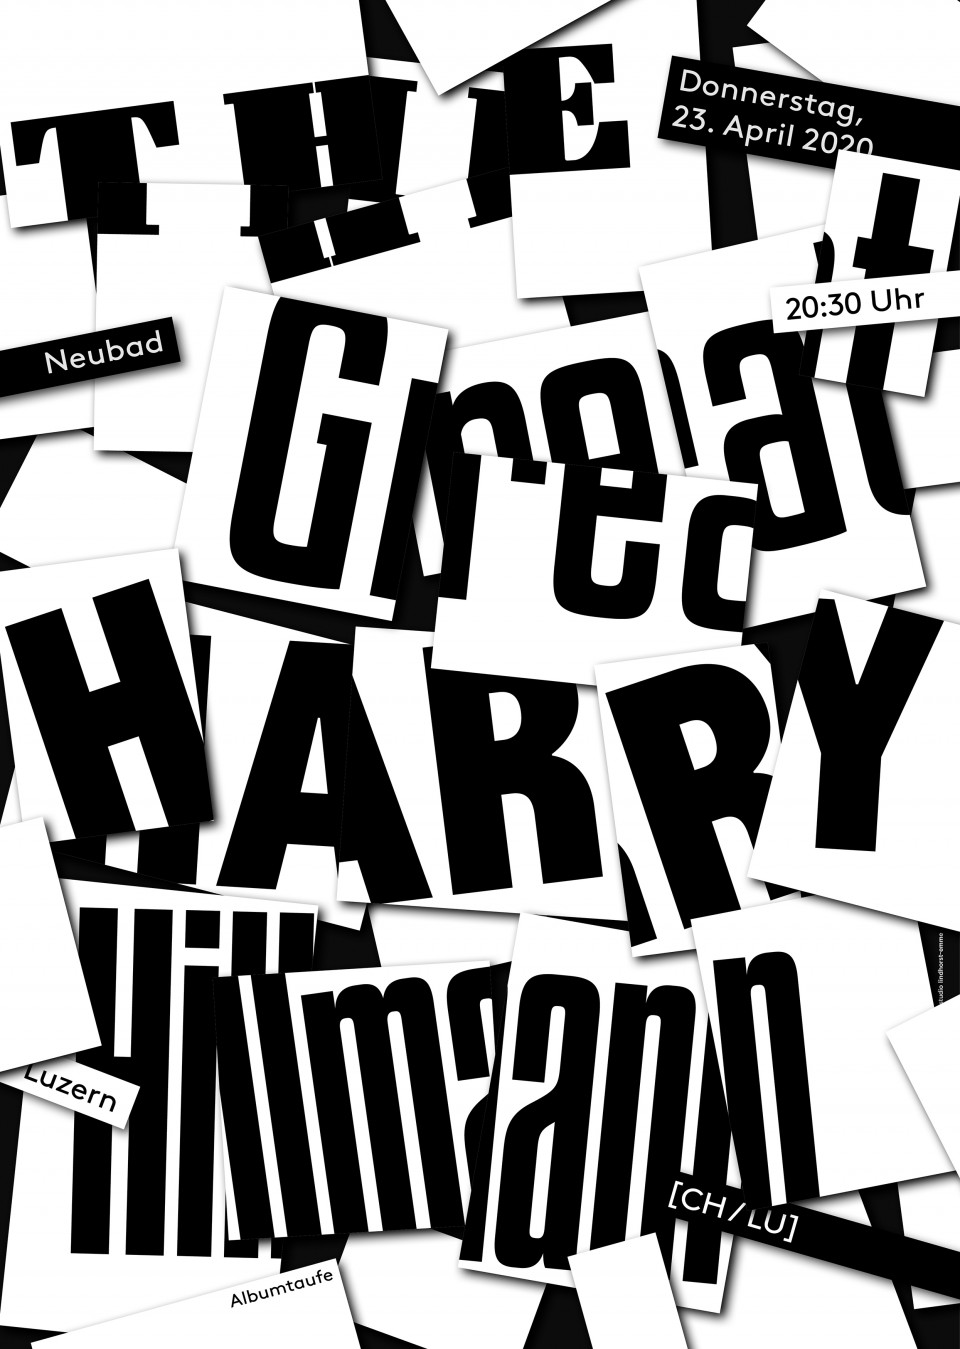 The Great Harry Hillmann